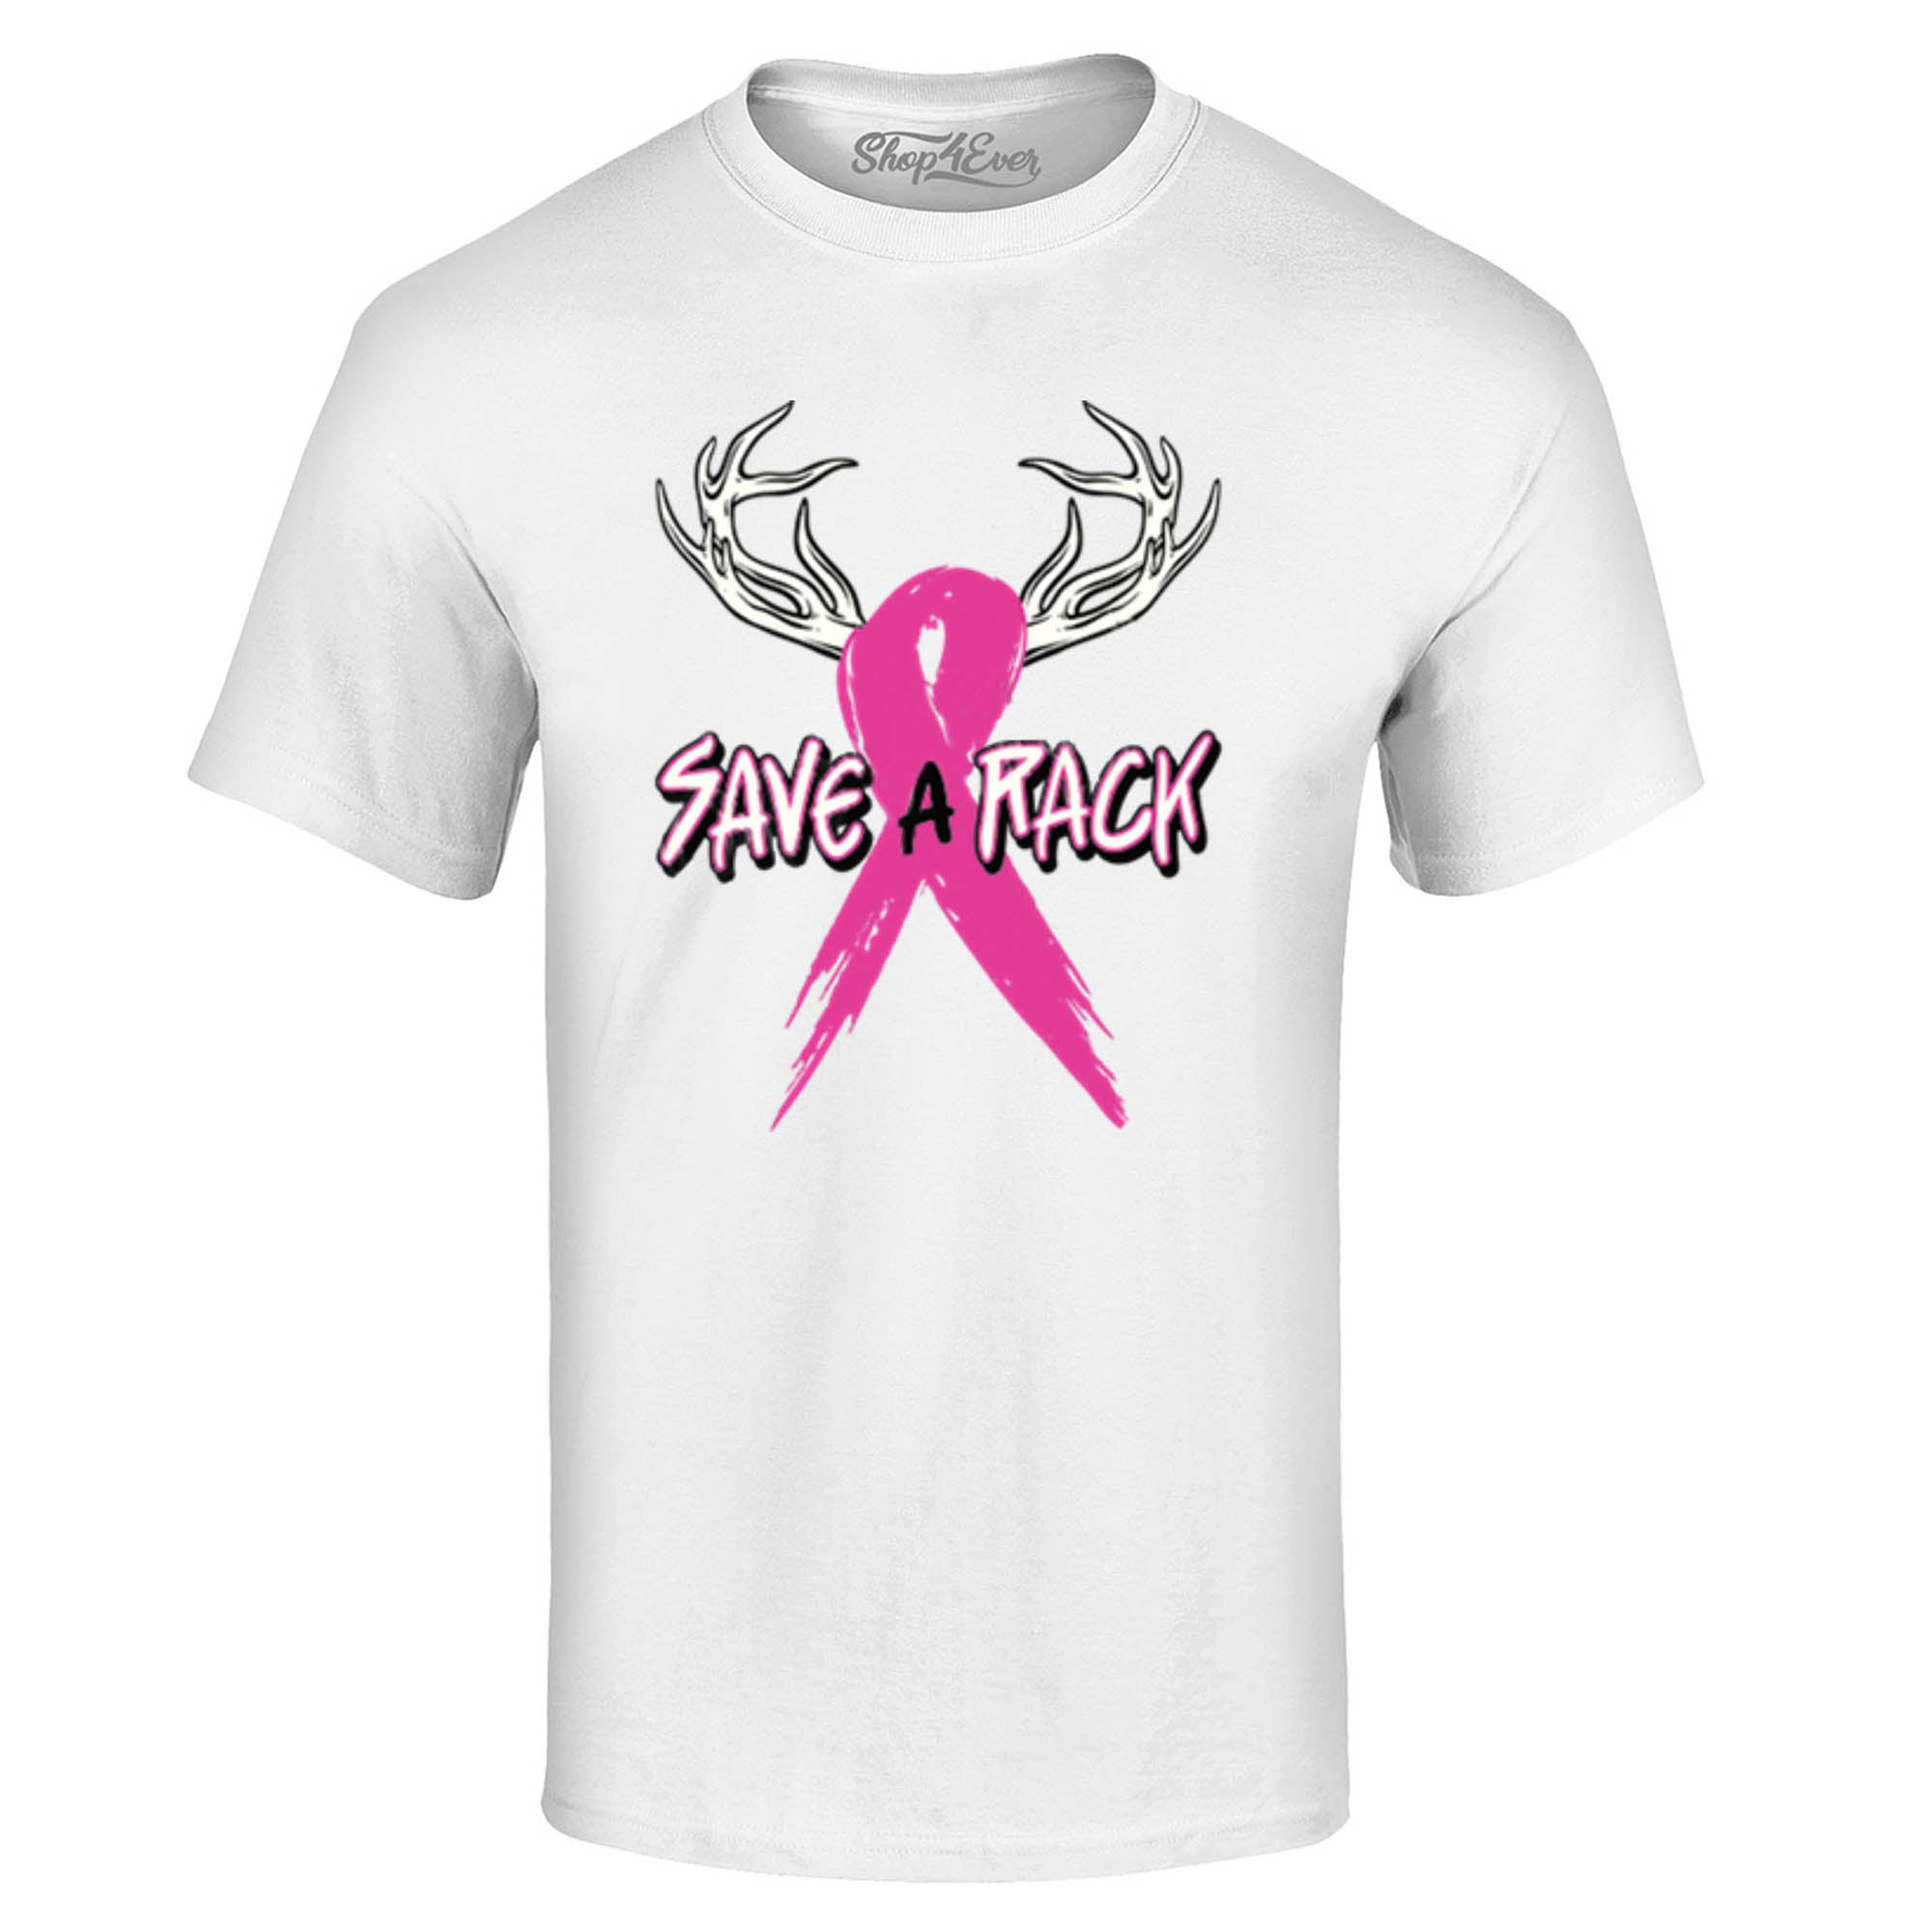 Save A Rack Pink Ribbon T-Shirt Breast Cancer Awareness Tee